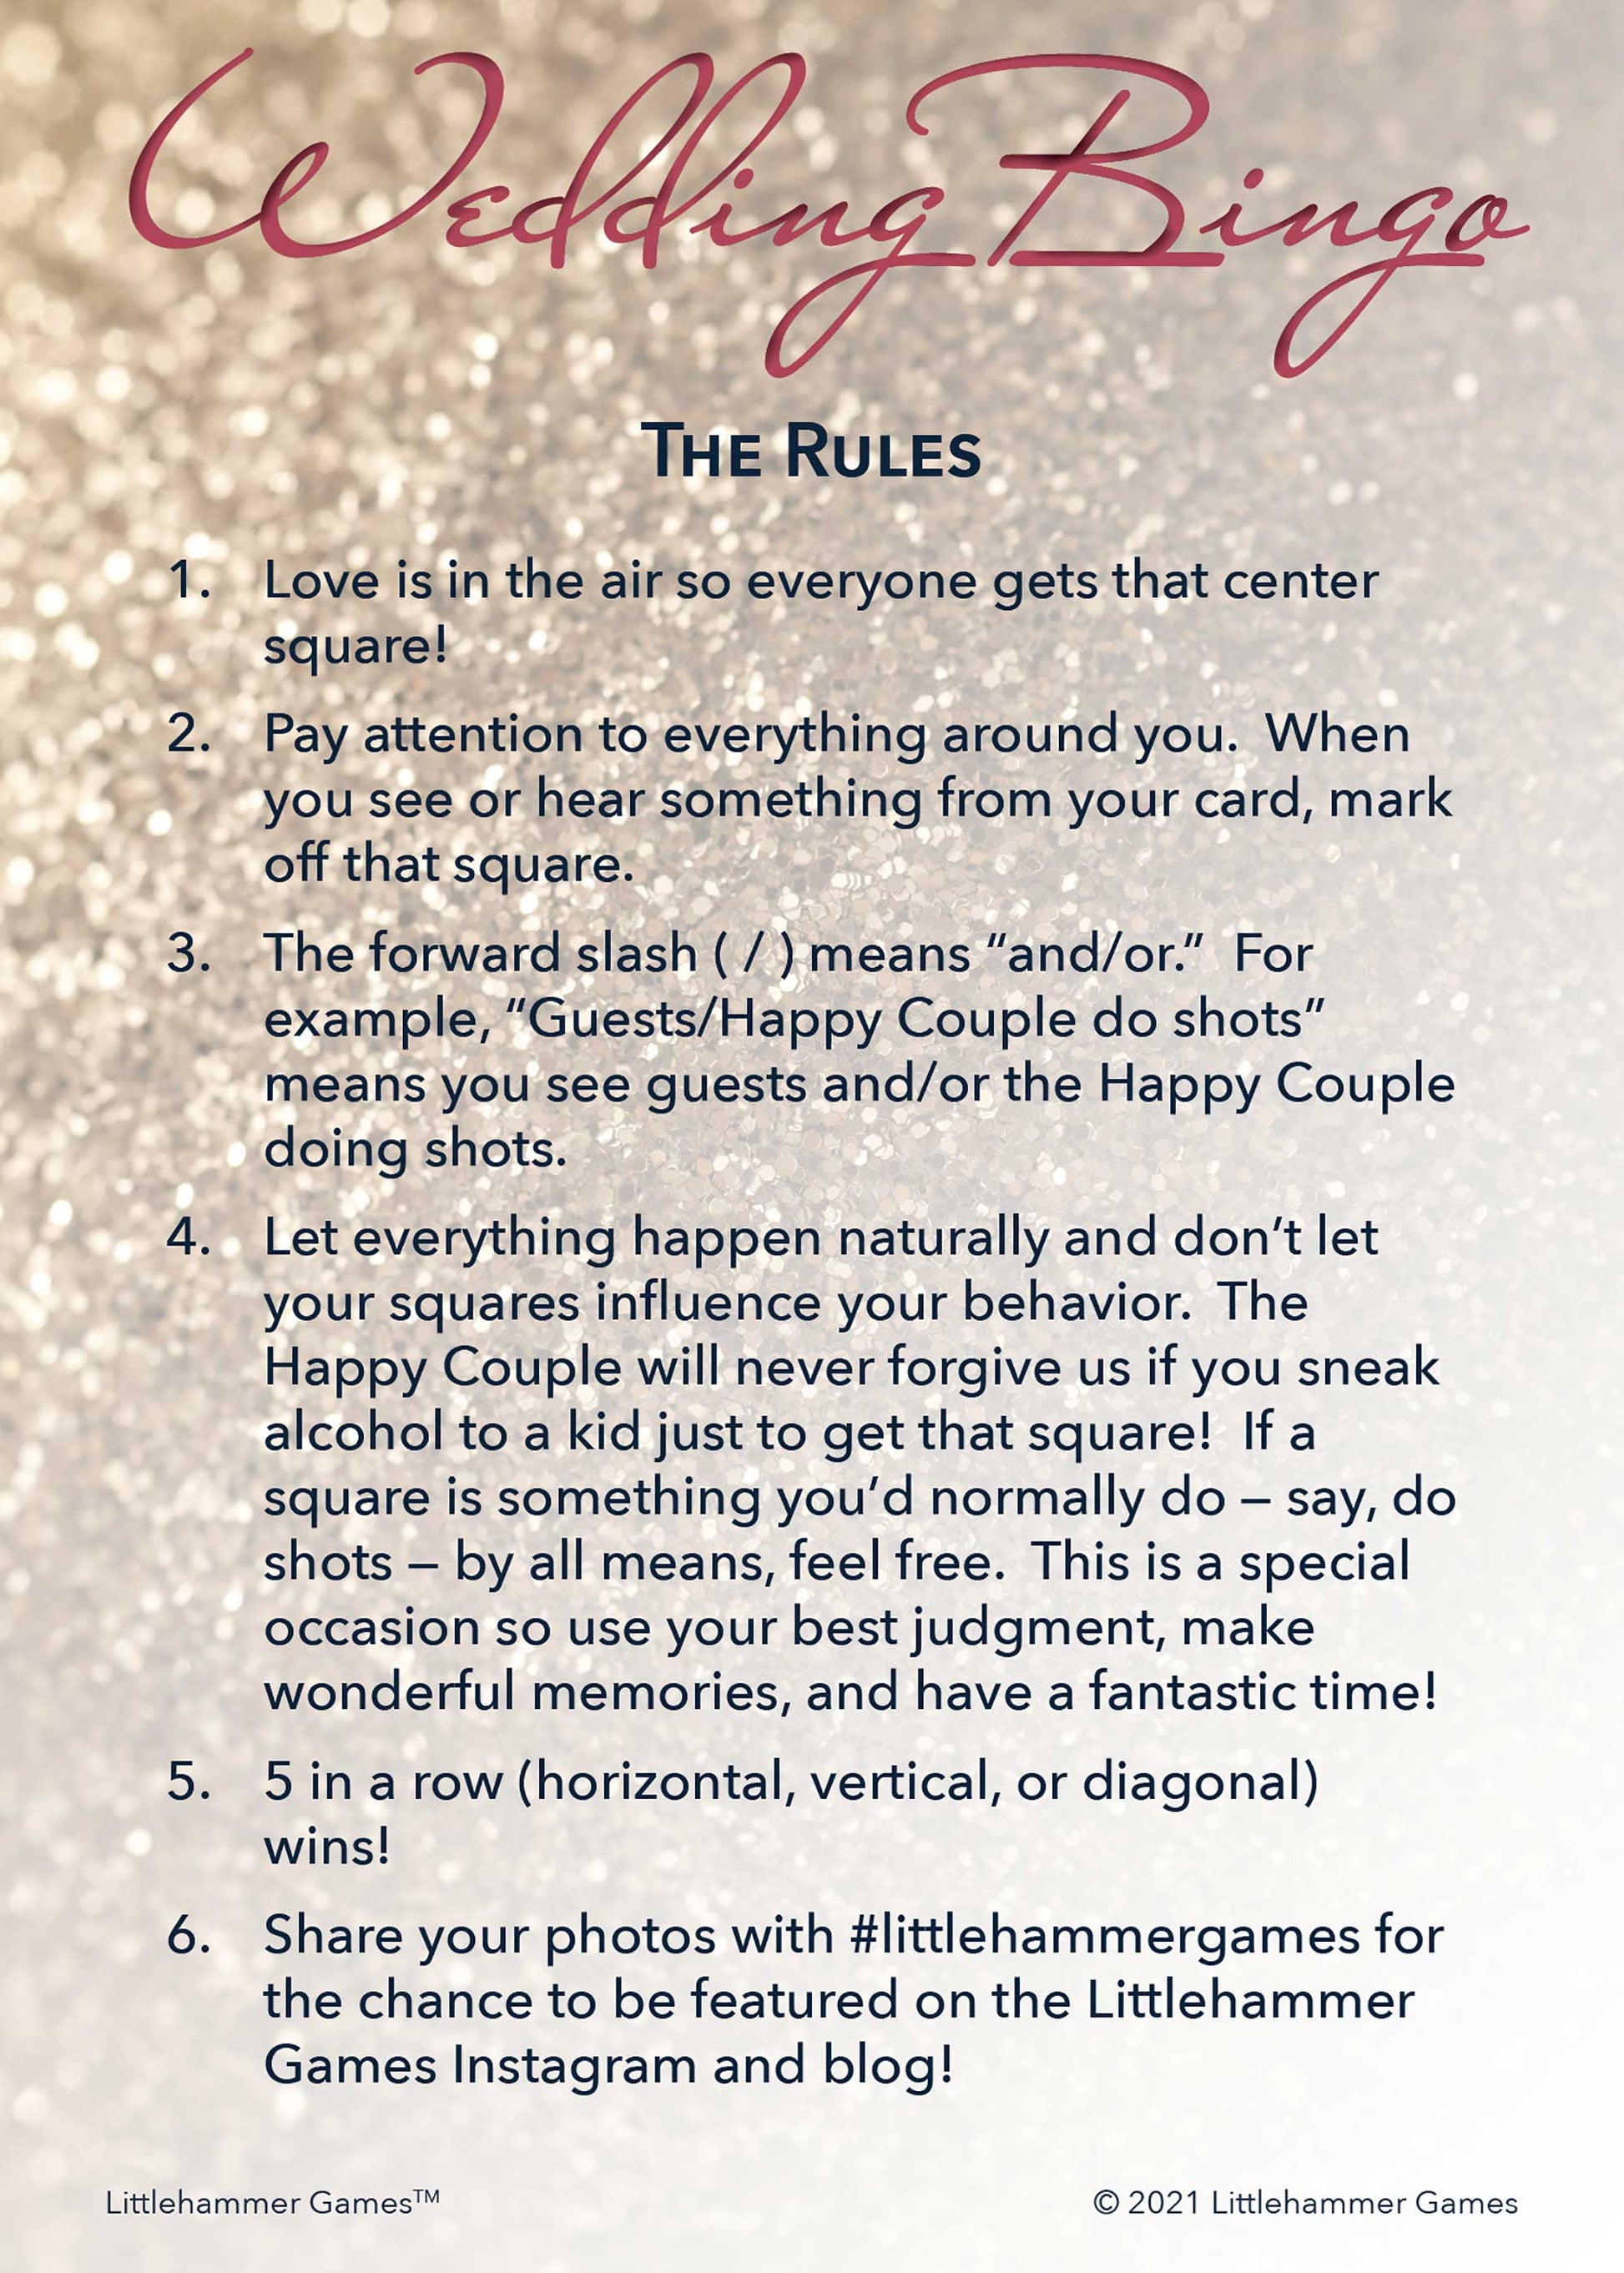 Wedding Bingo rules card on a glittery rose gold background